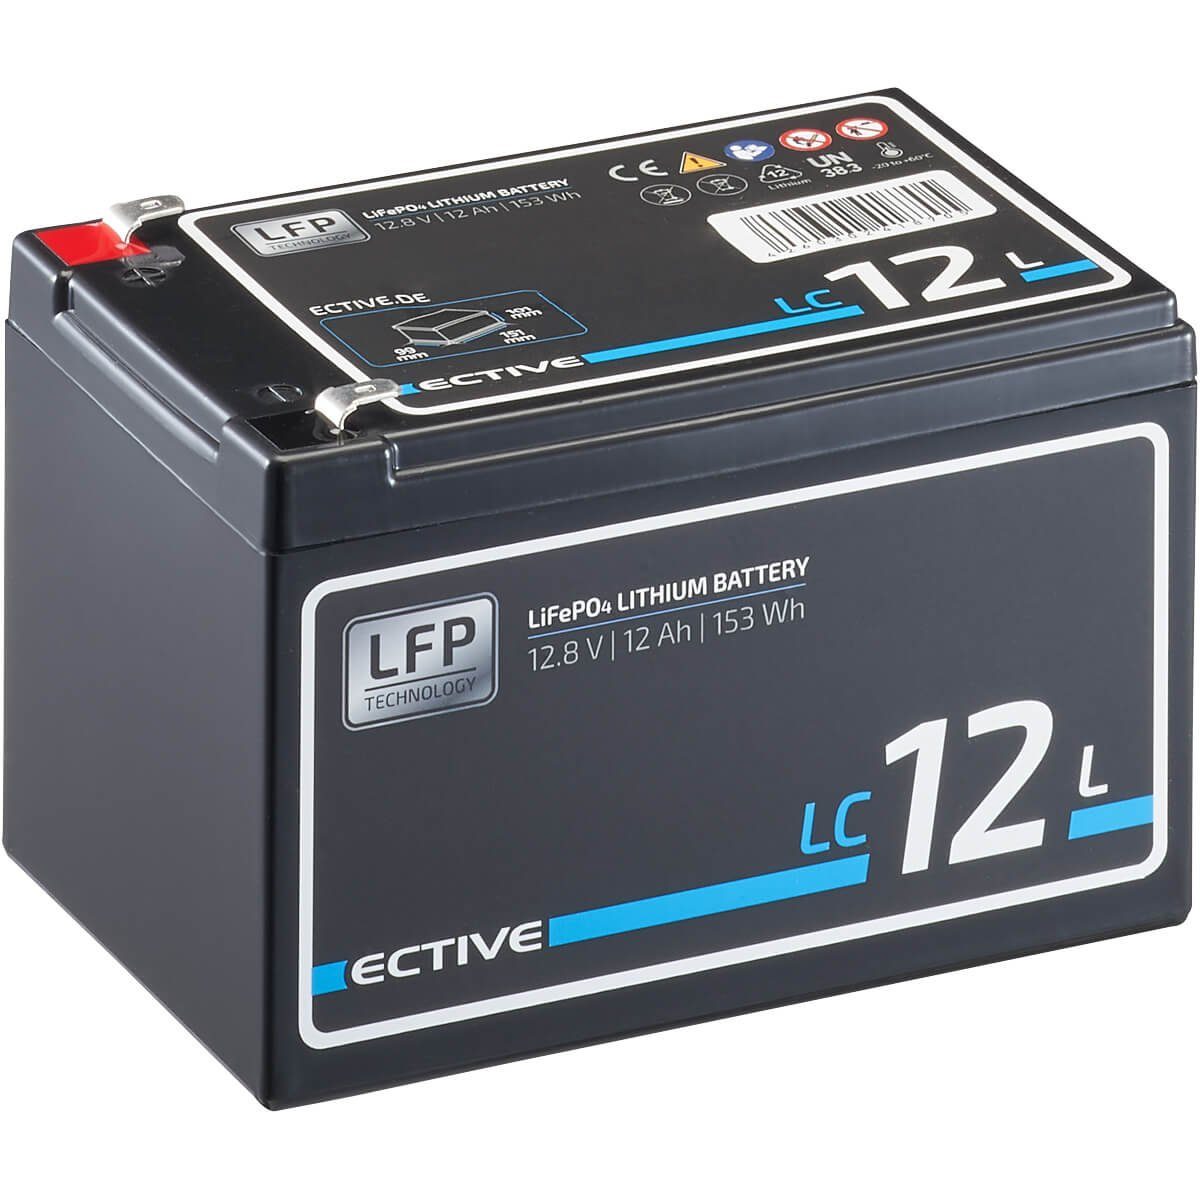 ECTIVE ECTIVE LC 12L 12V LiFePO4 Lithium Batterie 12Ah Batterie, (12 V)